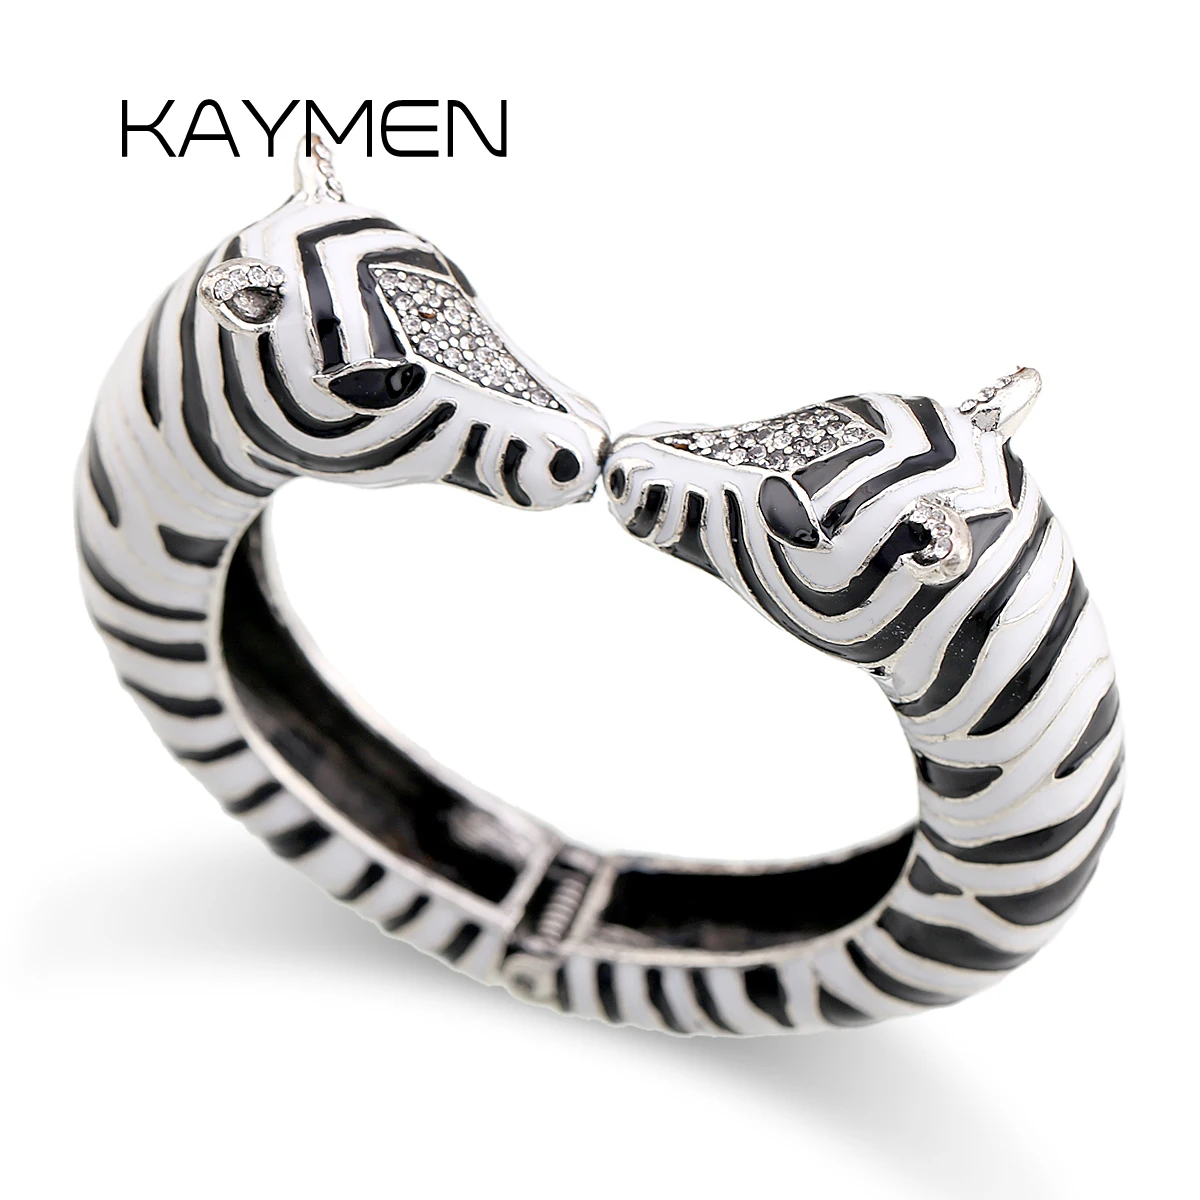 

Newest Kaymen Jewelry Large Size Statement Bracelet Cuff Bangle Vintage Style Enamel Animal Zebra Bracelet Fashion Jewelry